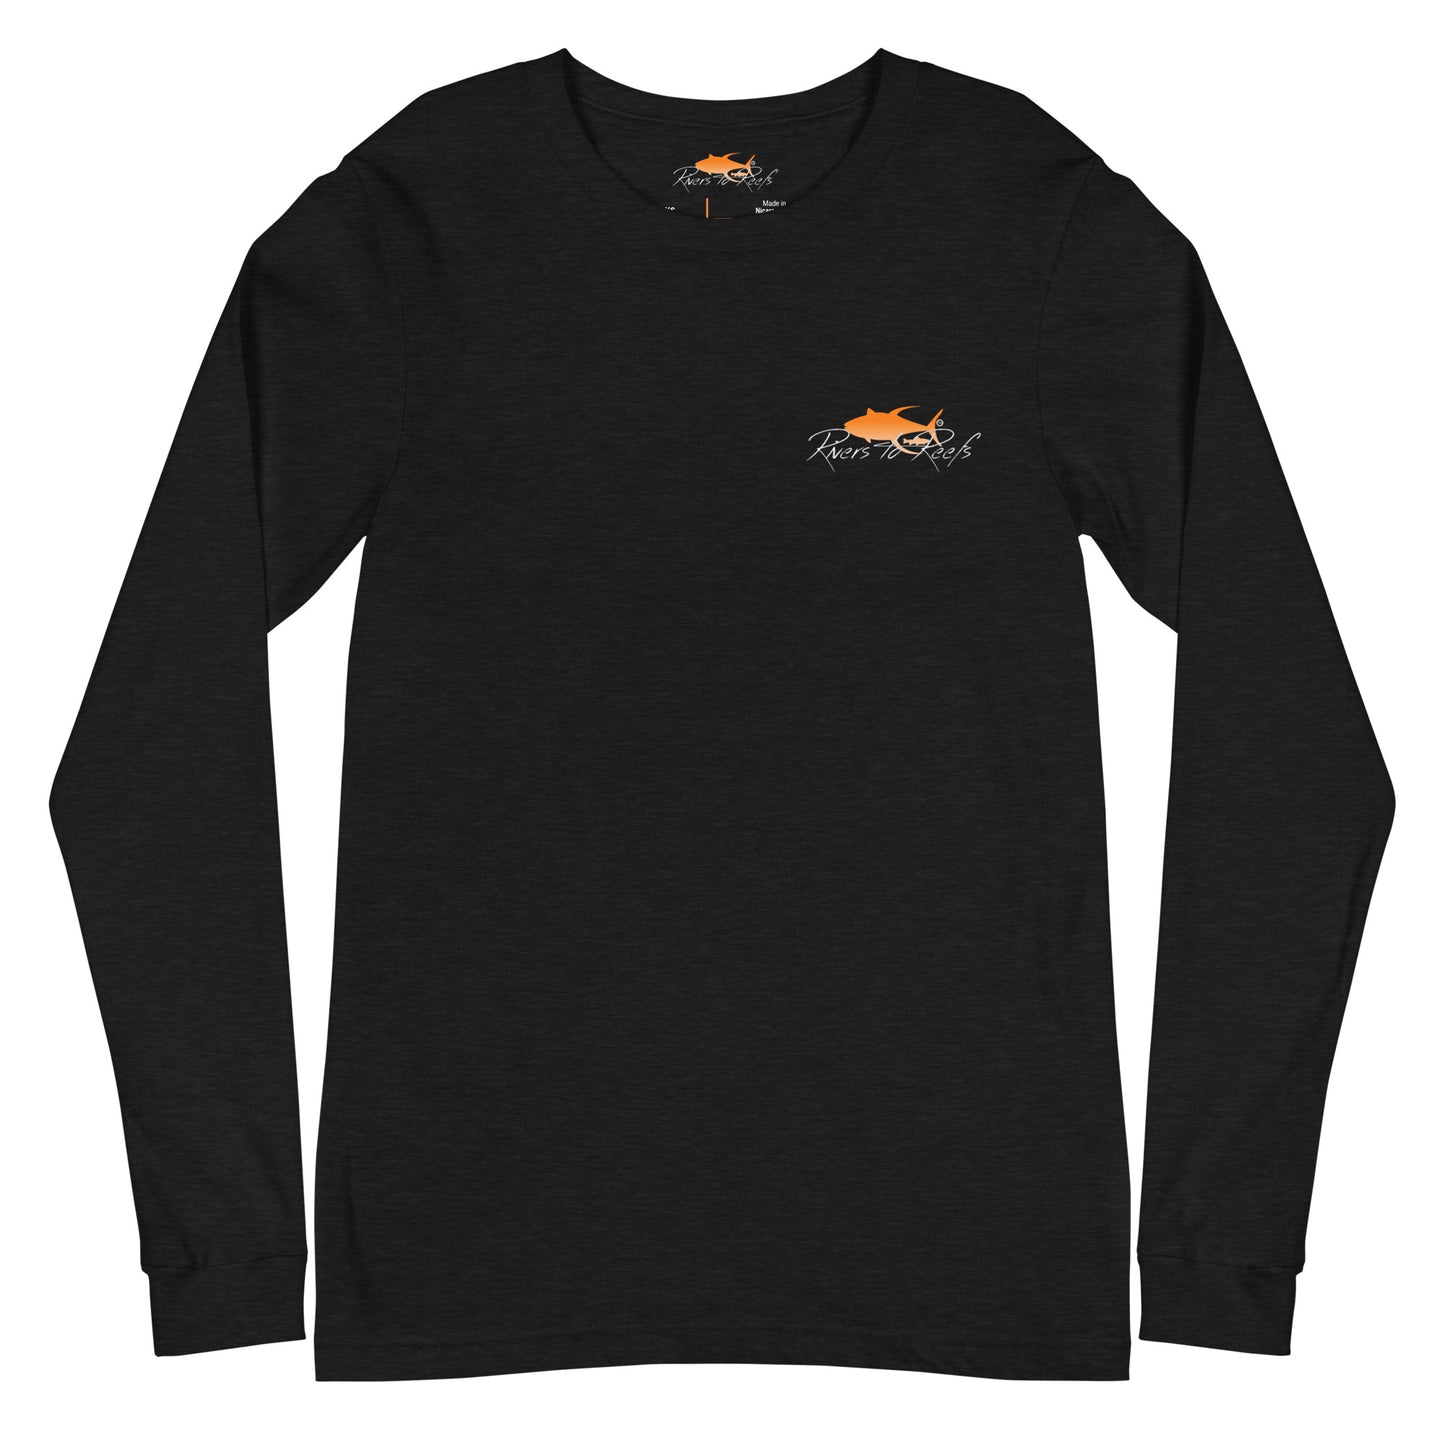 Teal/Orange Diamond Long Sleeve T-Shirt